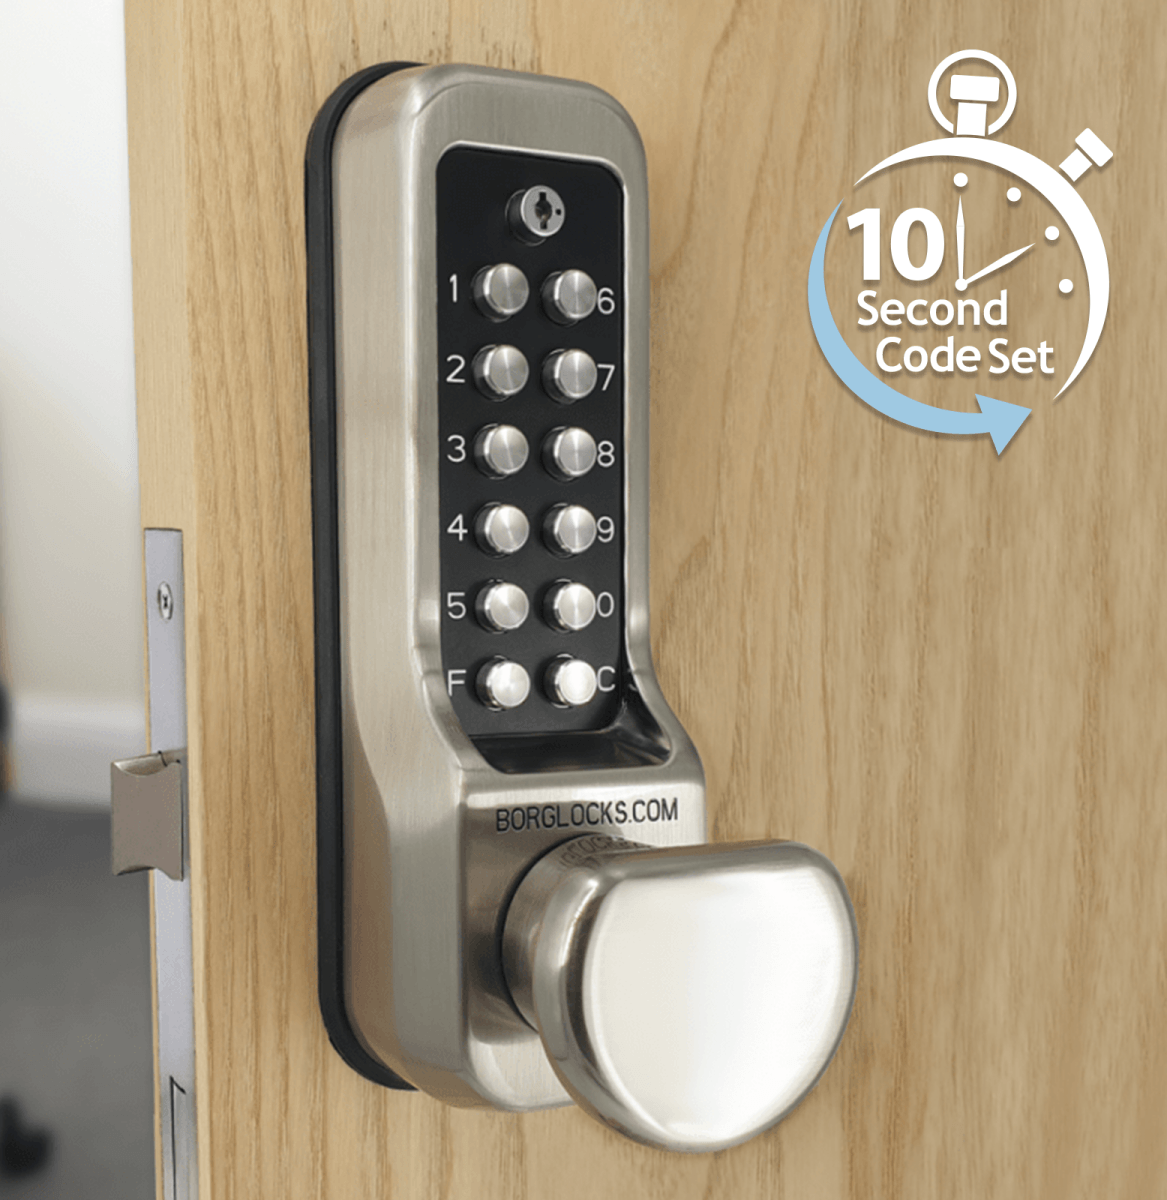 BL7103 ECP - Heavy duty knob turn keypad with internal handle, sash lockcase & on the door code change functionality